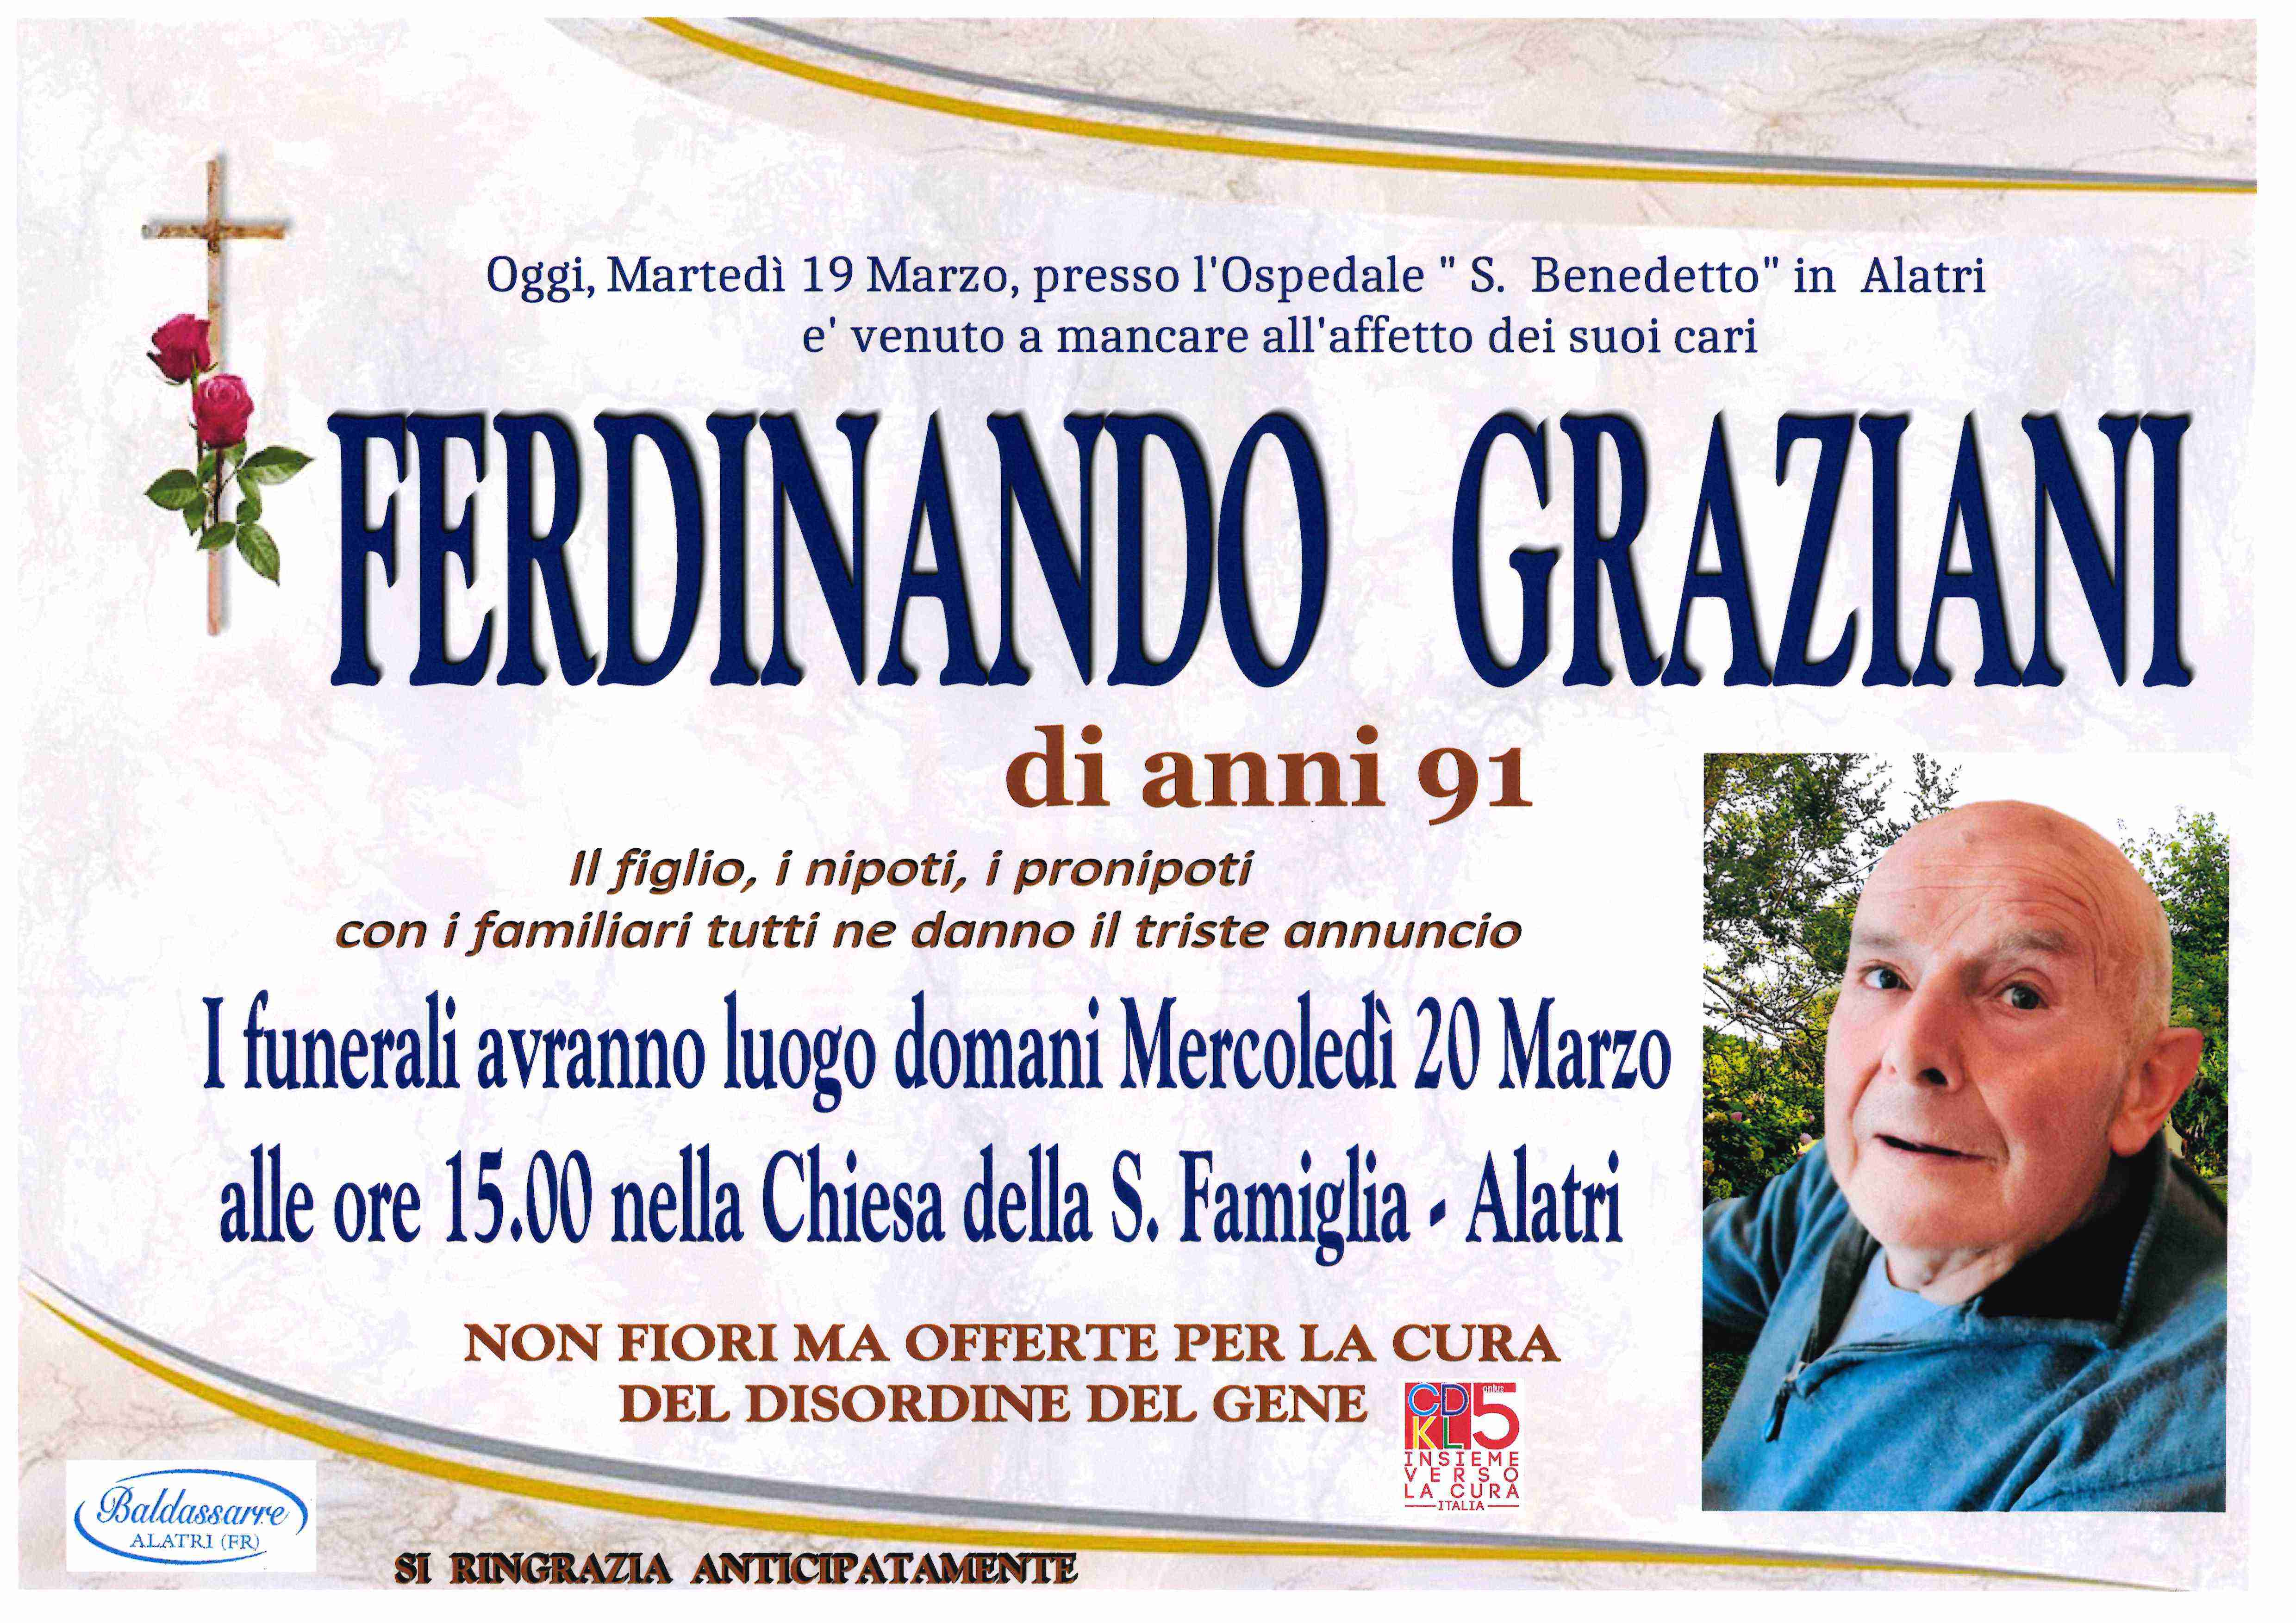 Ferdinando Graziani